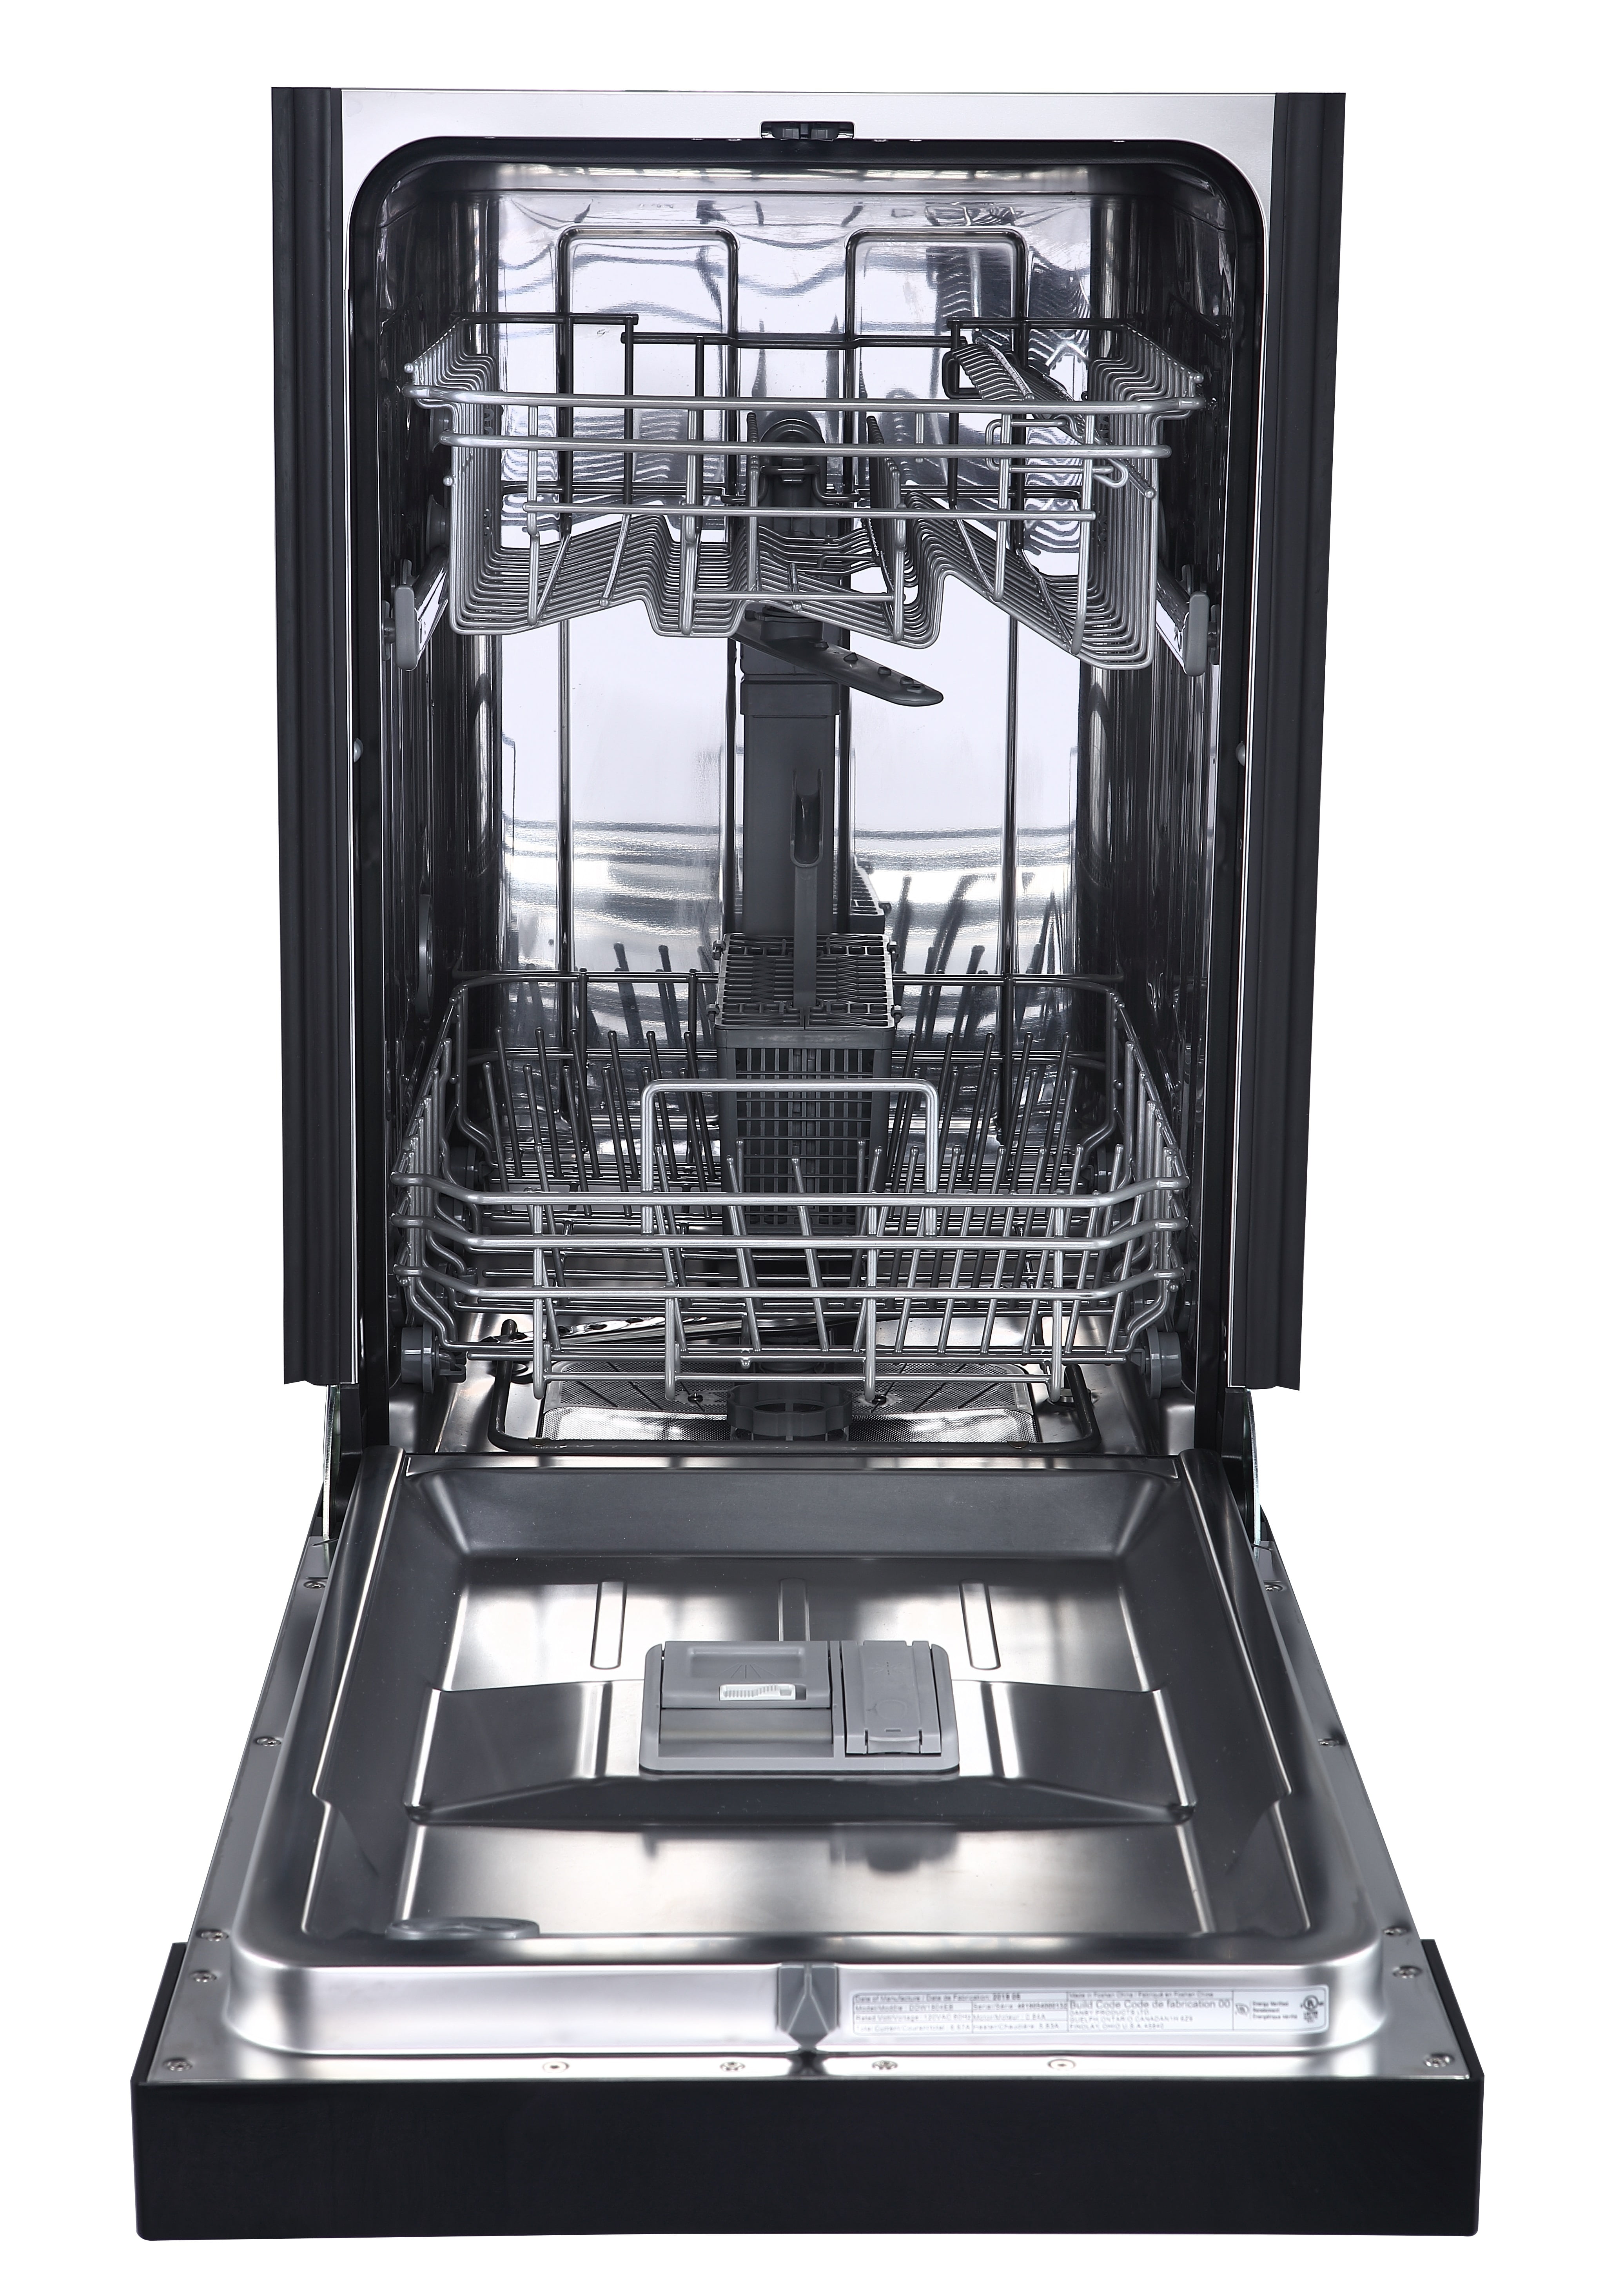 walmart 18 inch dishwasher